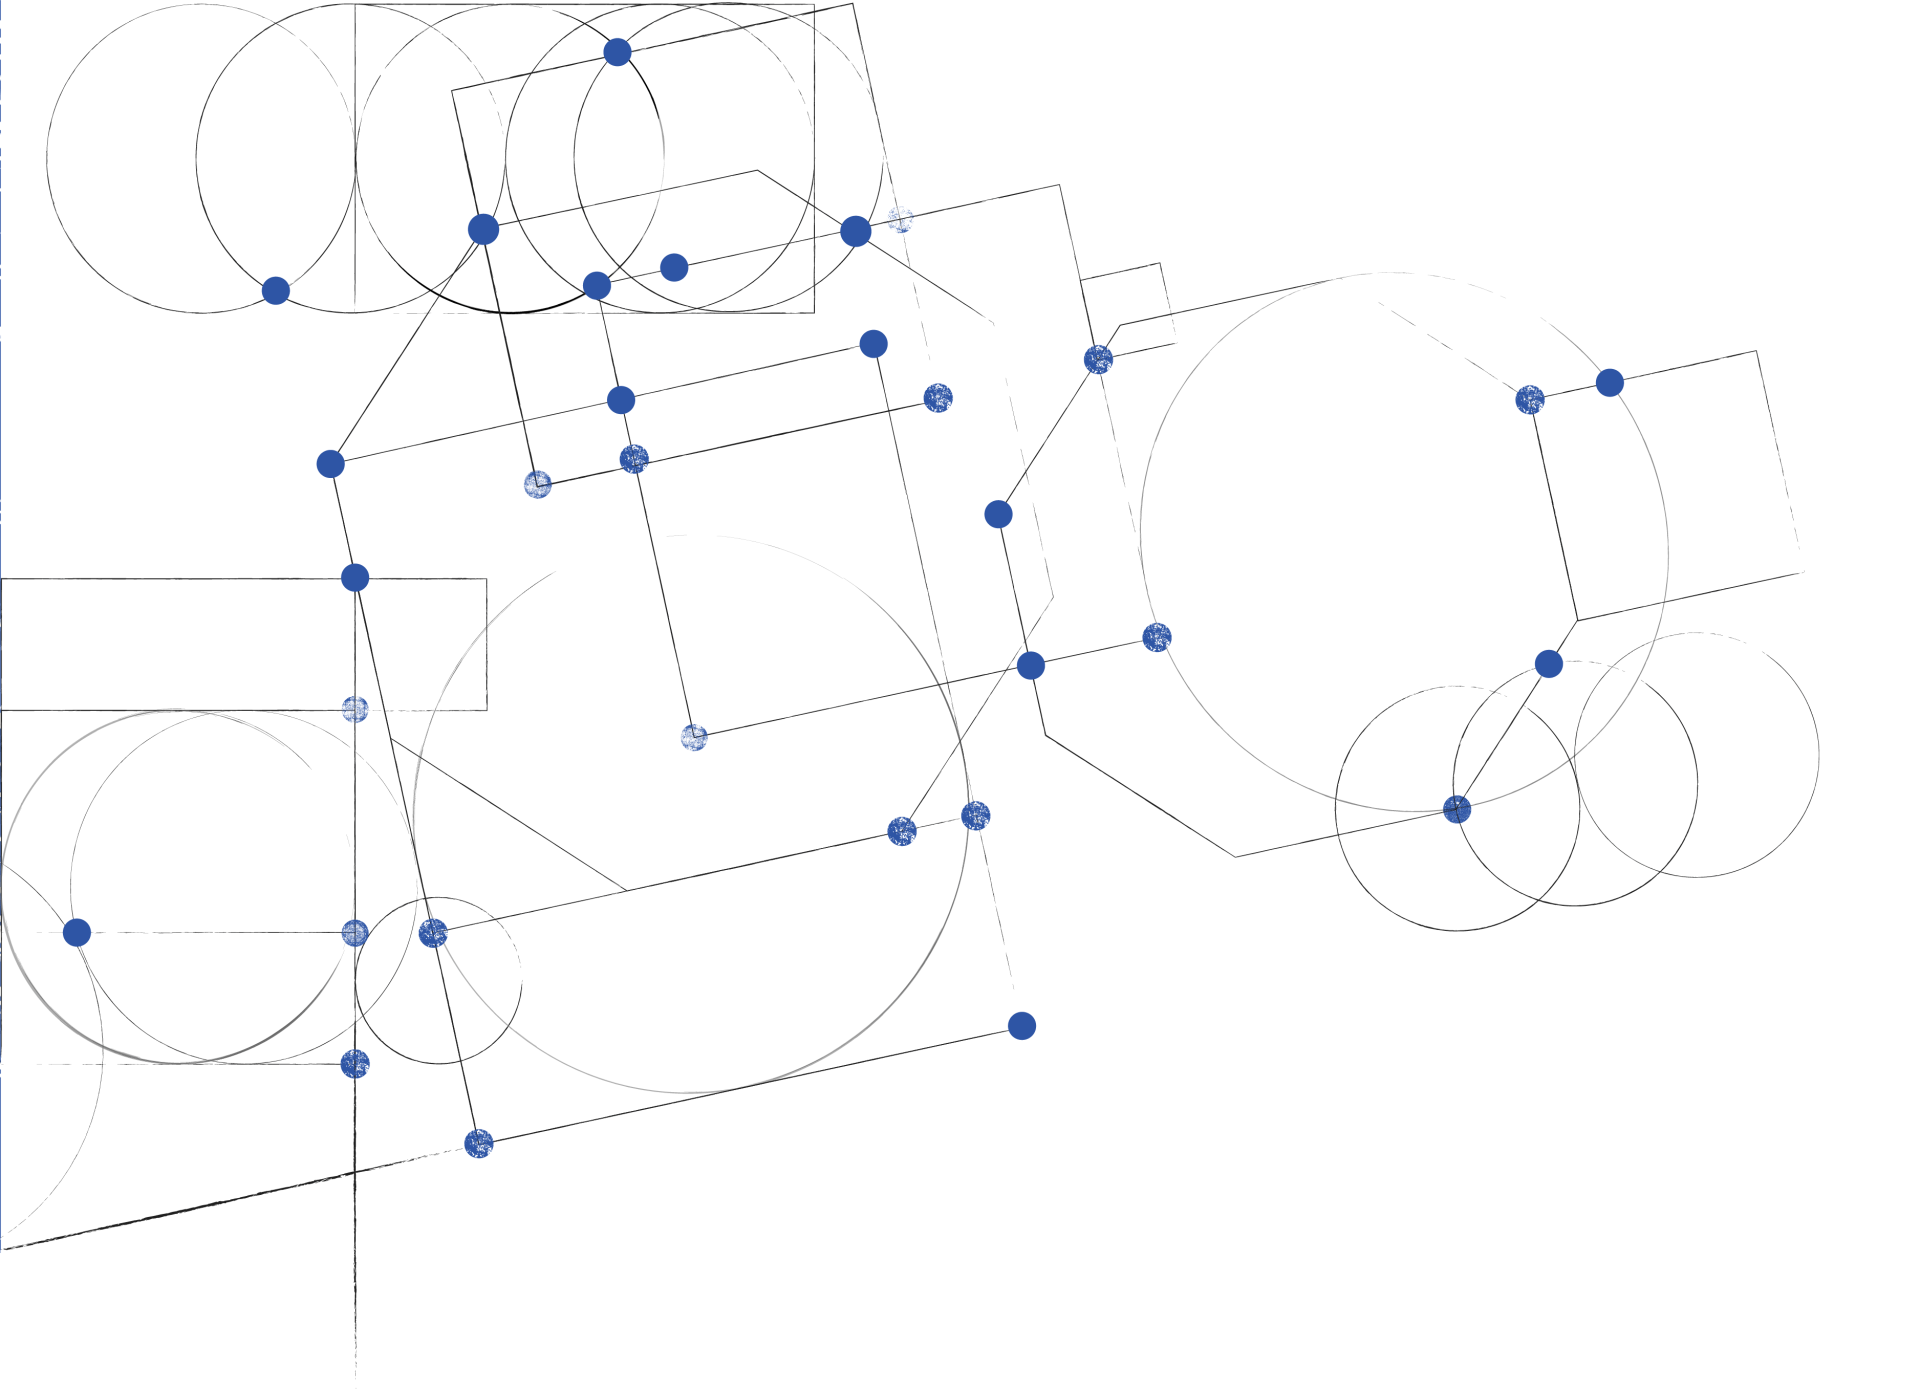 Network of connected lines representing socio-economic development